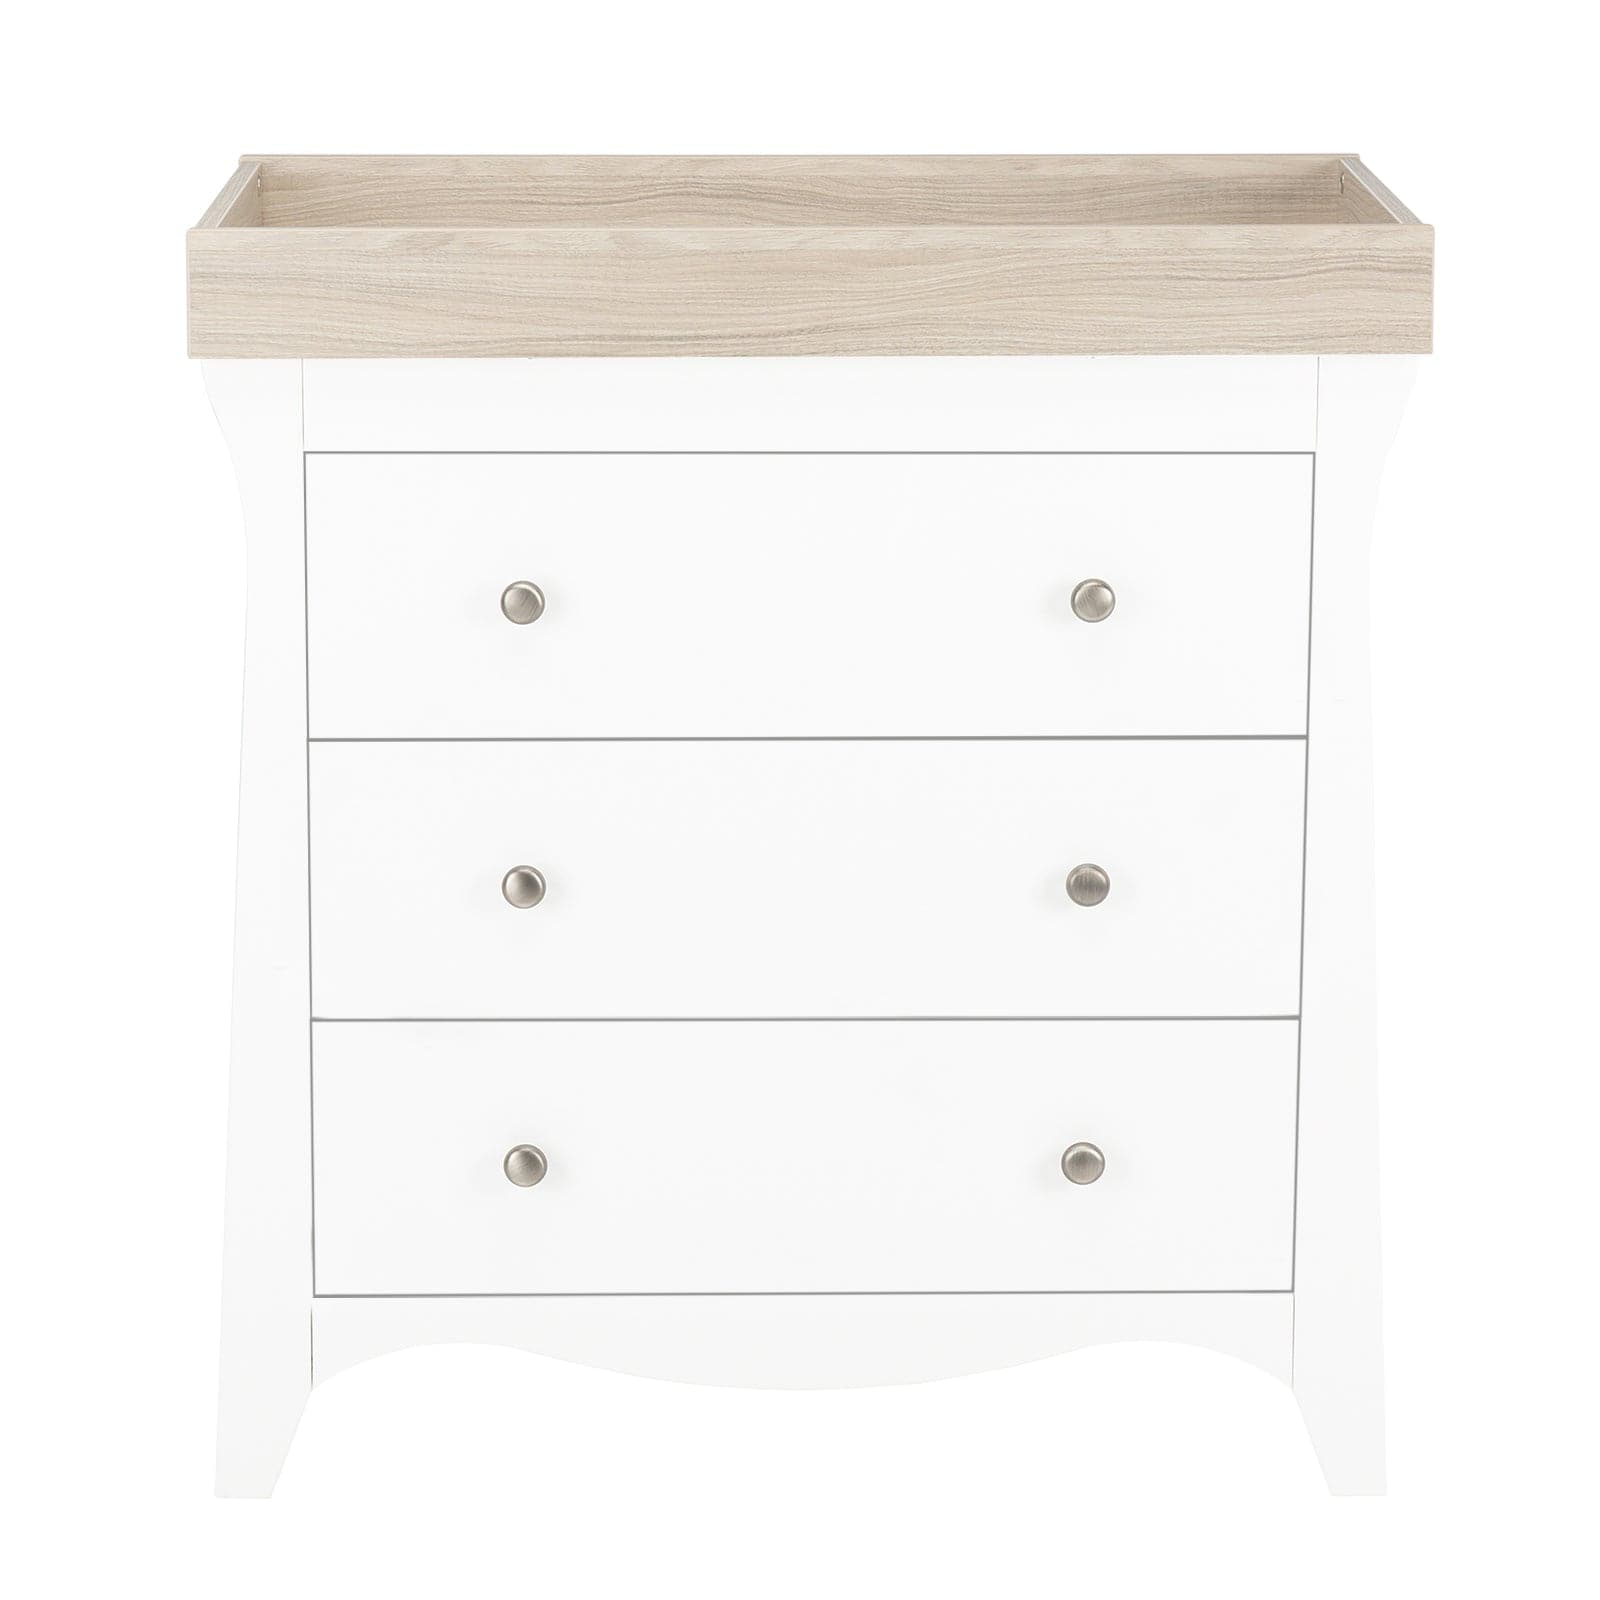 Cuddleco Clara 3 Piece Nursery Furniture Set (Cot Bed, Wardrobe & Dresser) - White & Ash -  | For Your Little One